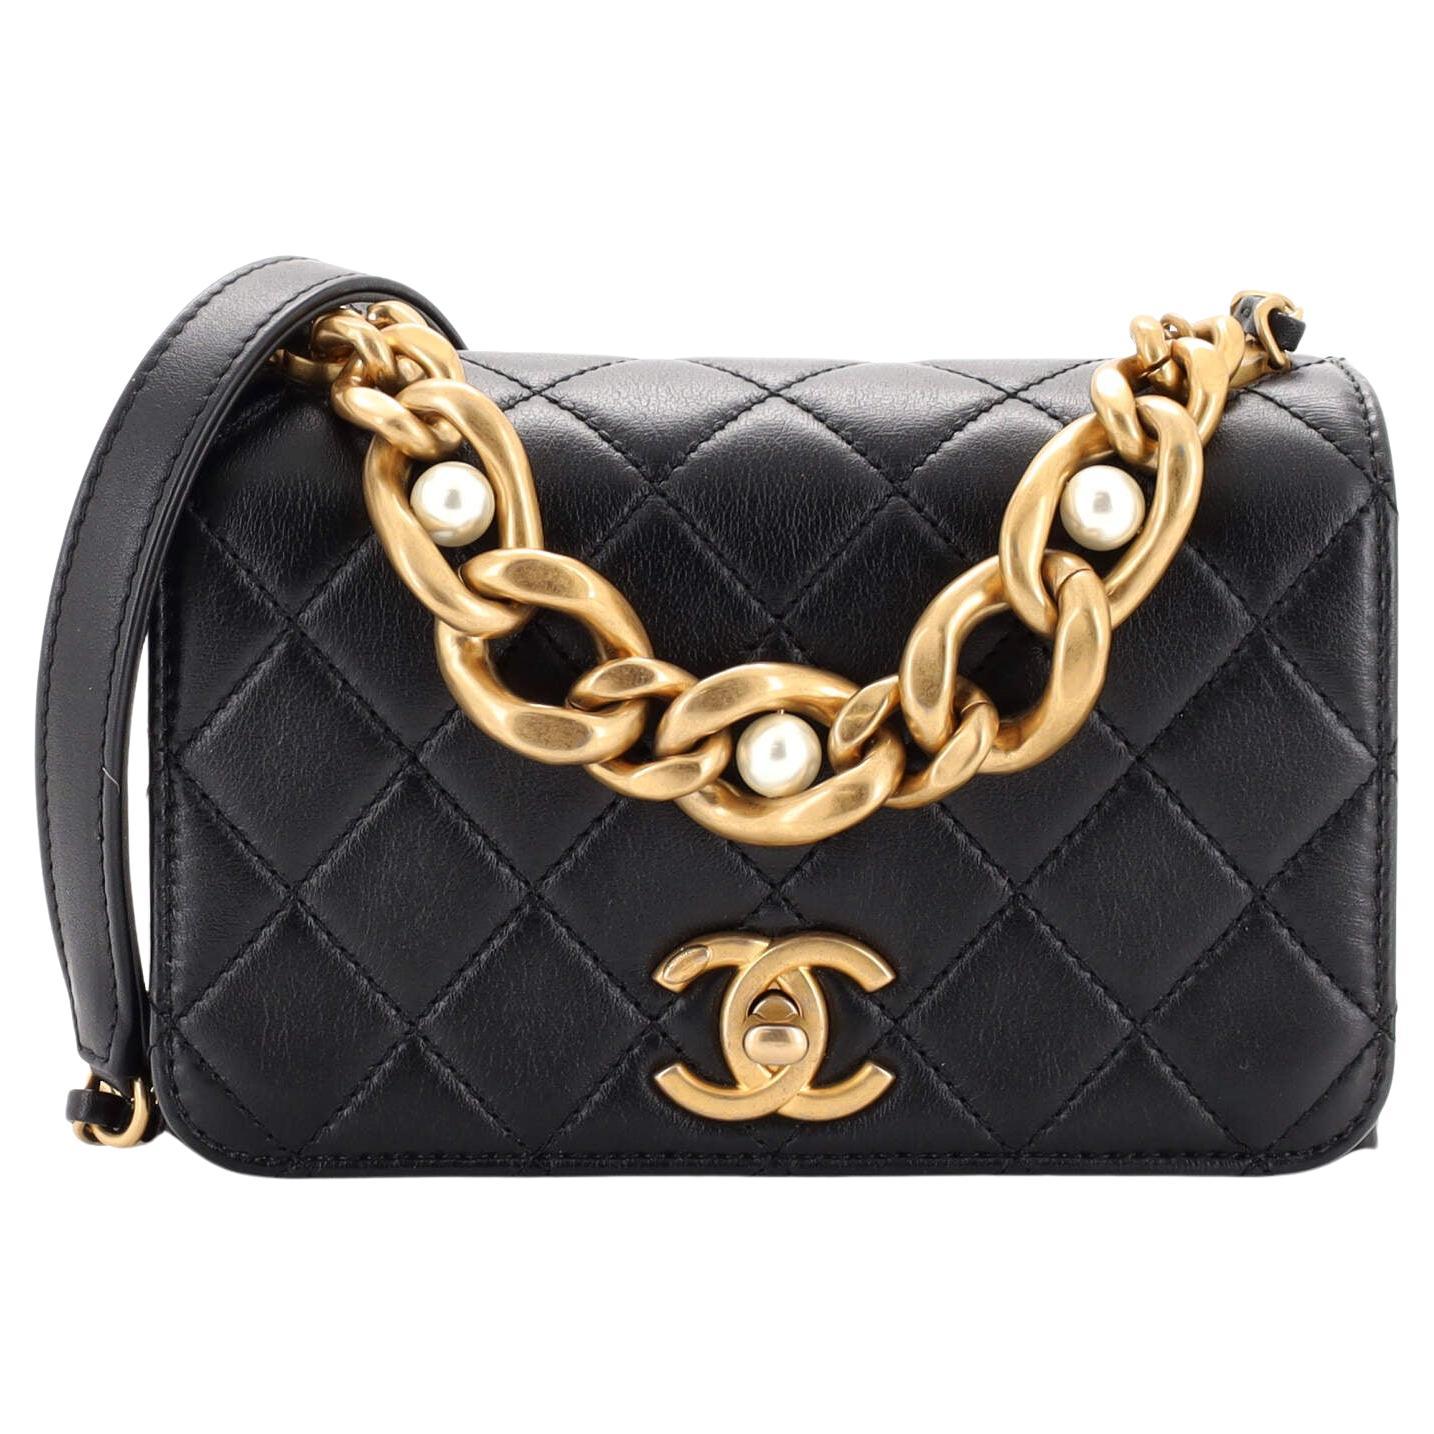 Chanel 22 Handbag 23B Shiny Calfskin Black Chain Quilt in Shiny Calfskin  with Gold-Tone - US